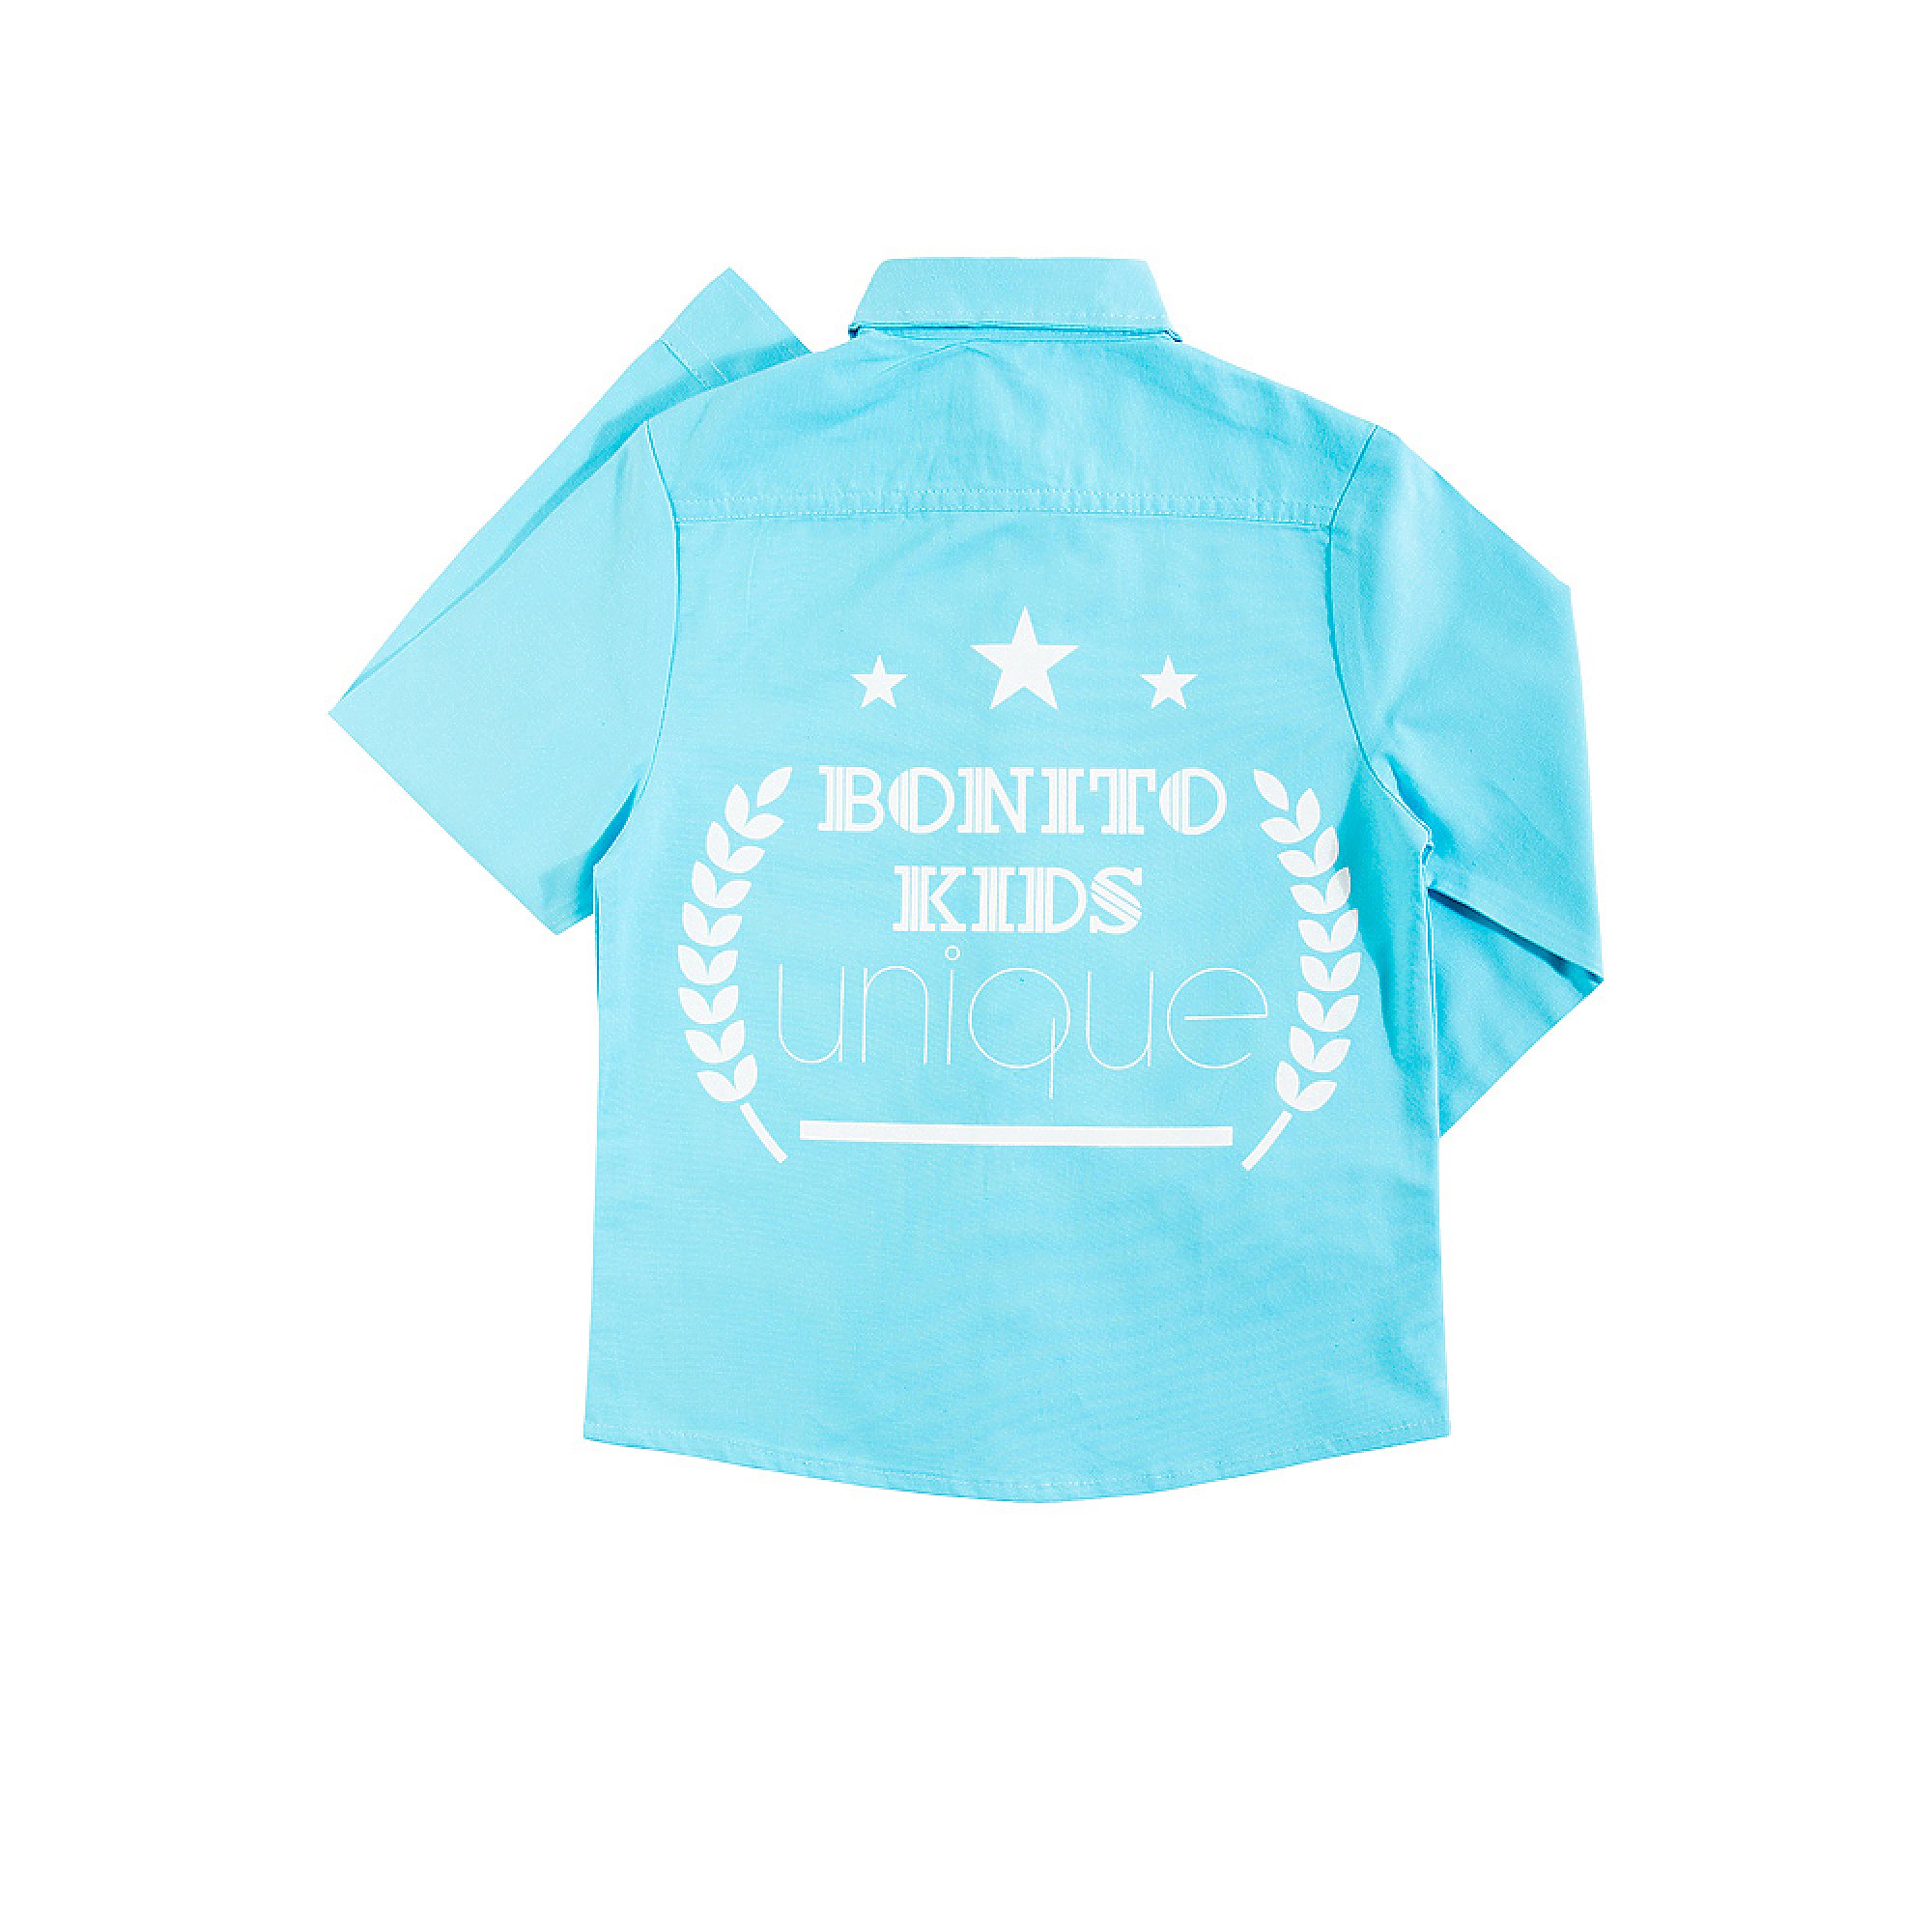 Рубашка для мальчика Bonito